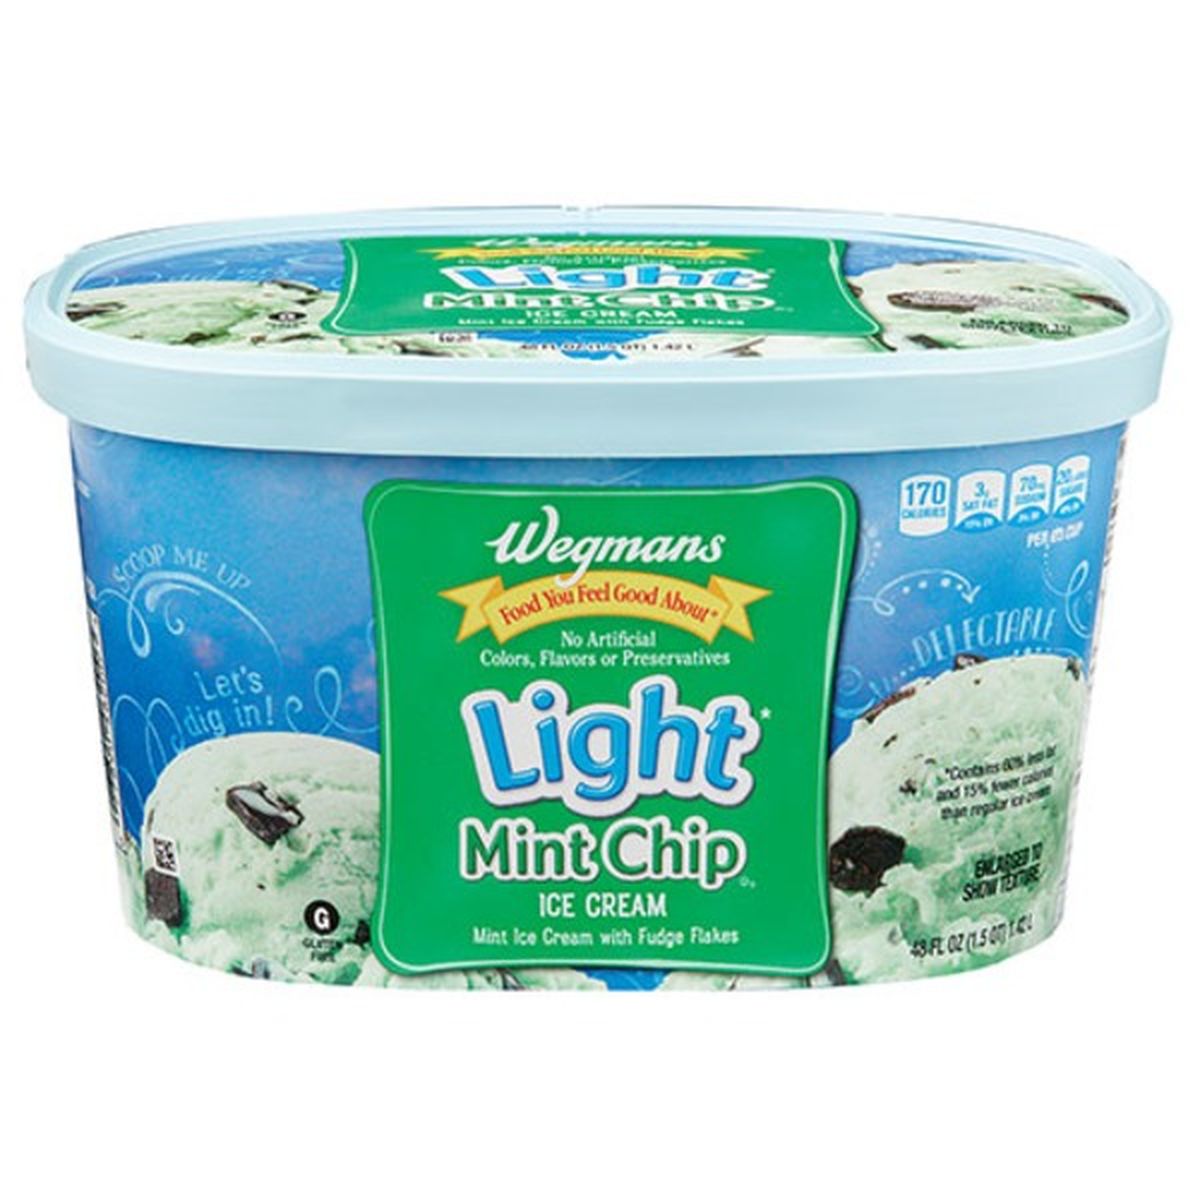 Calories in Wegmans Light* Mint Chip Ice Cream